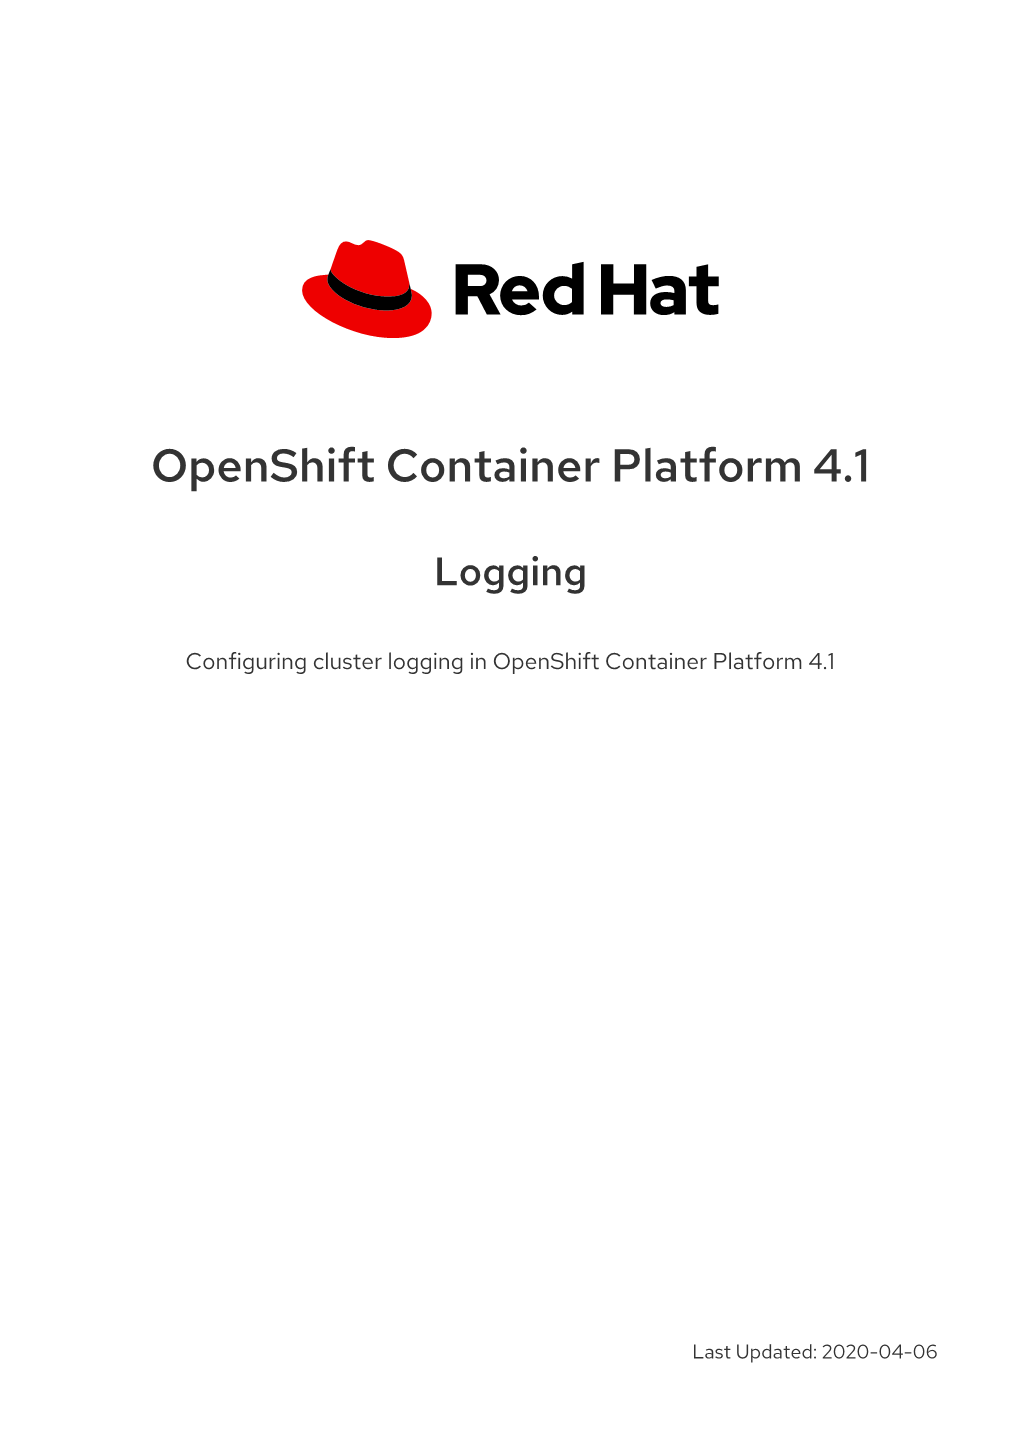 Openshift Container Platform 4.1 Logging